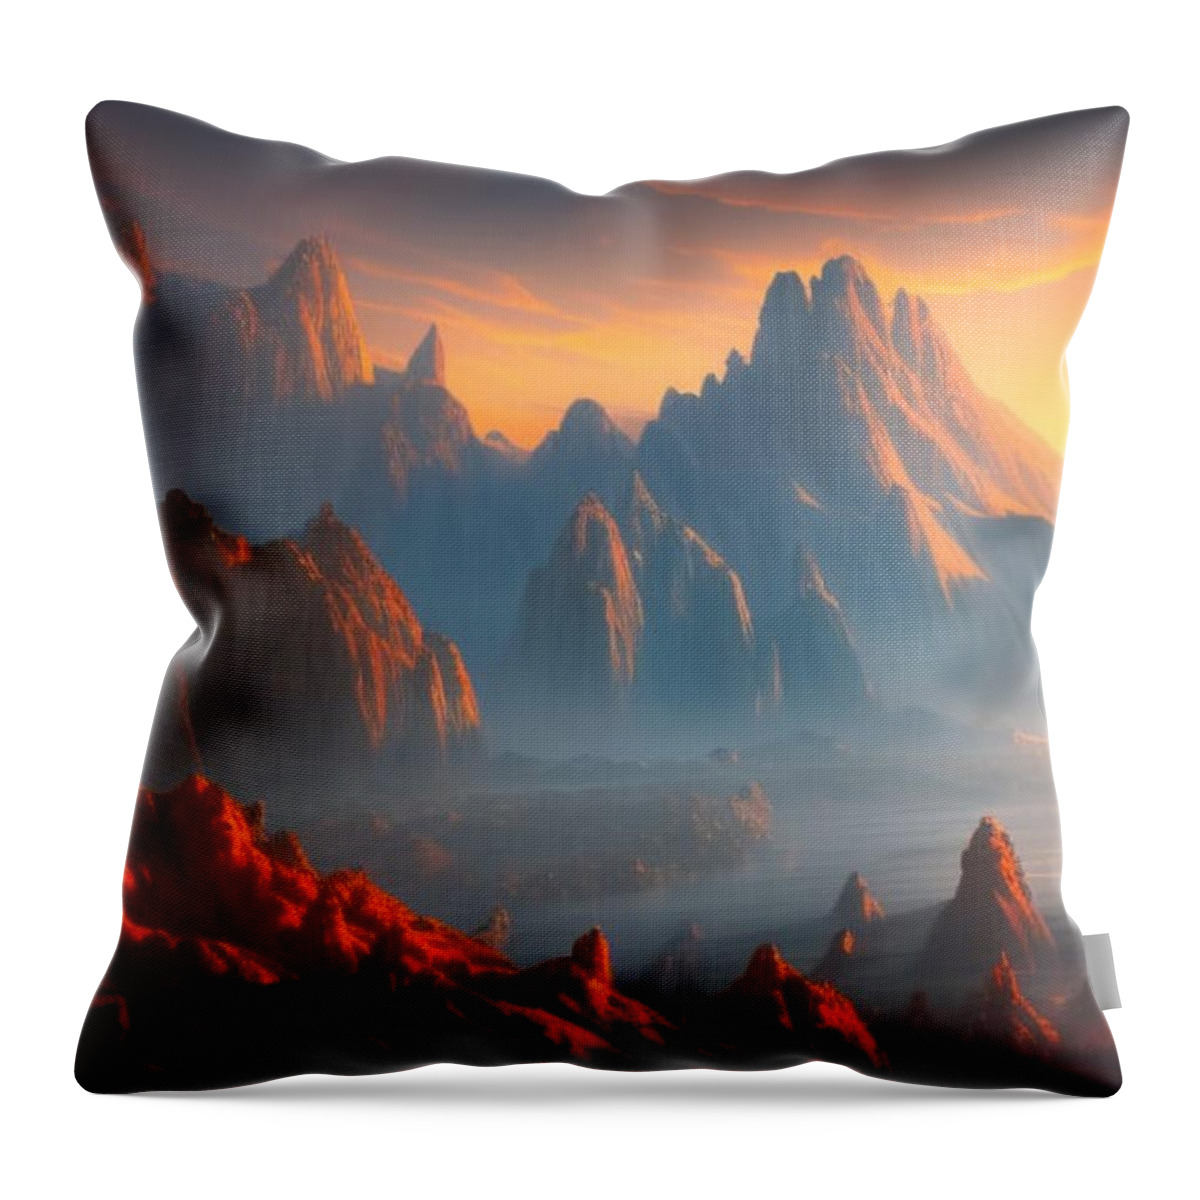 Sunrise Throw Pillow featuring the digital art Sunrise Mountain by Michael Galvin